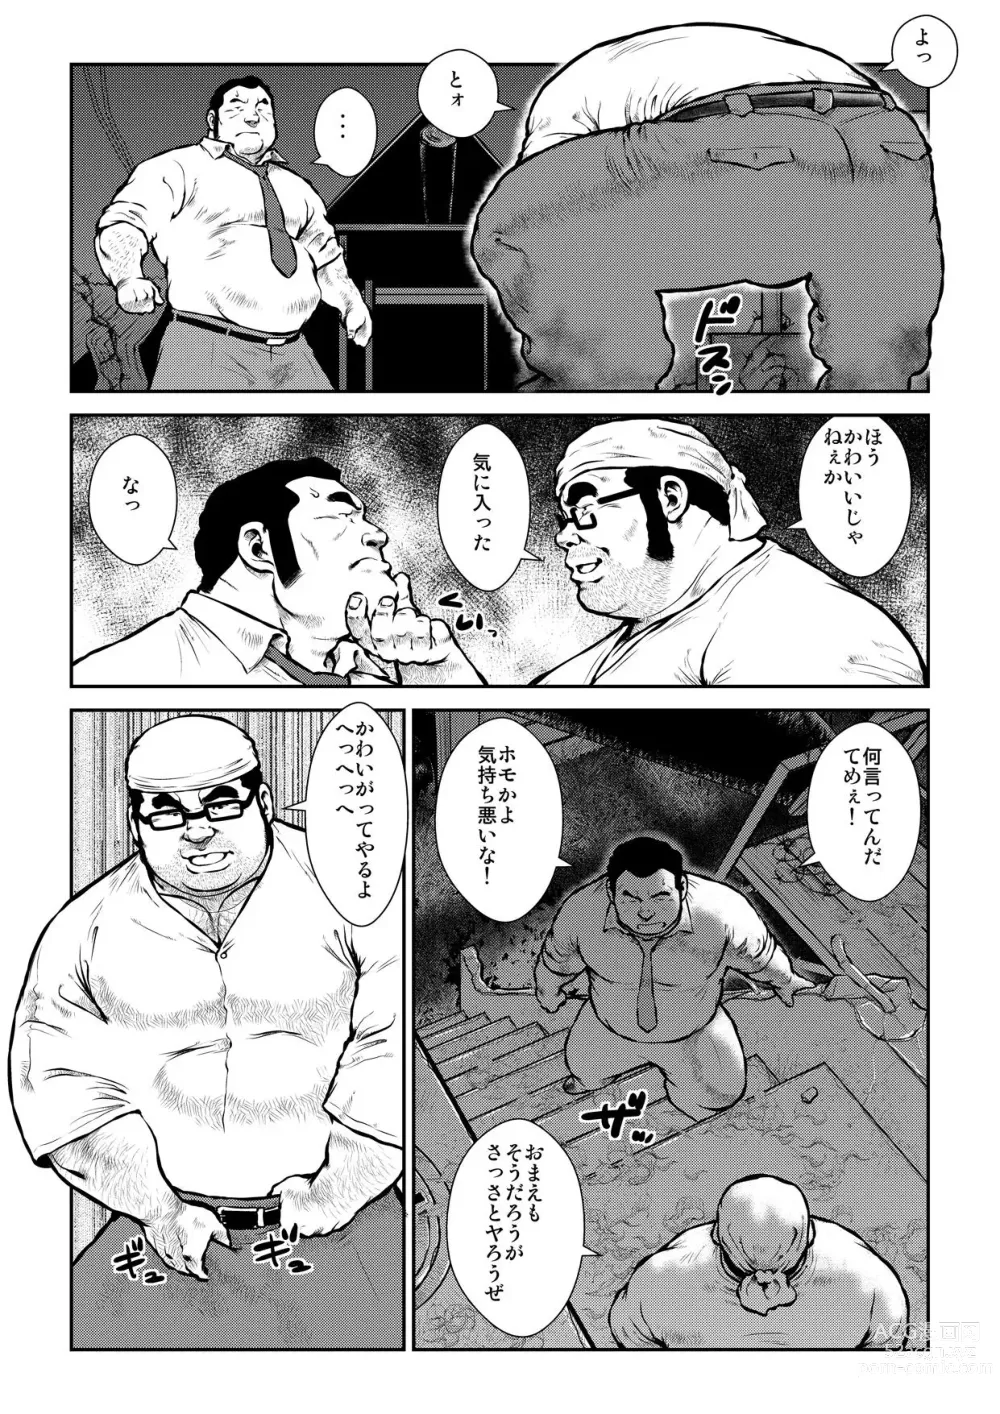 Page 4 of doujinshi Anaba